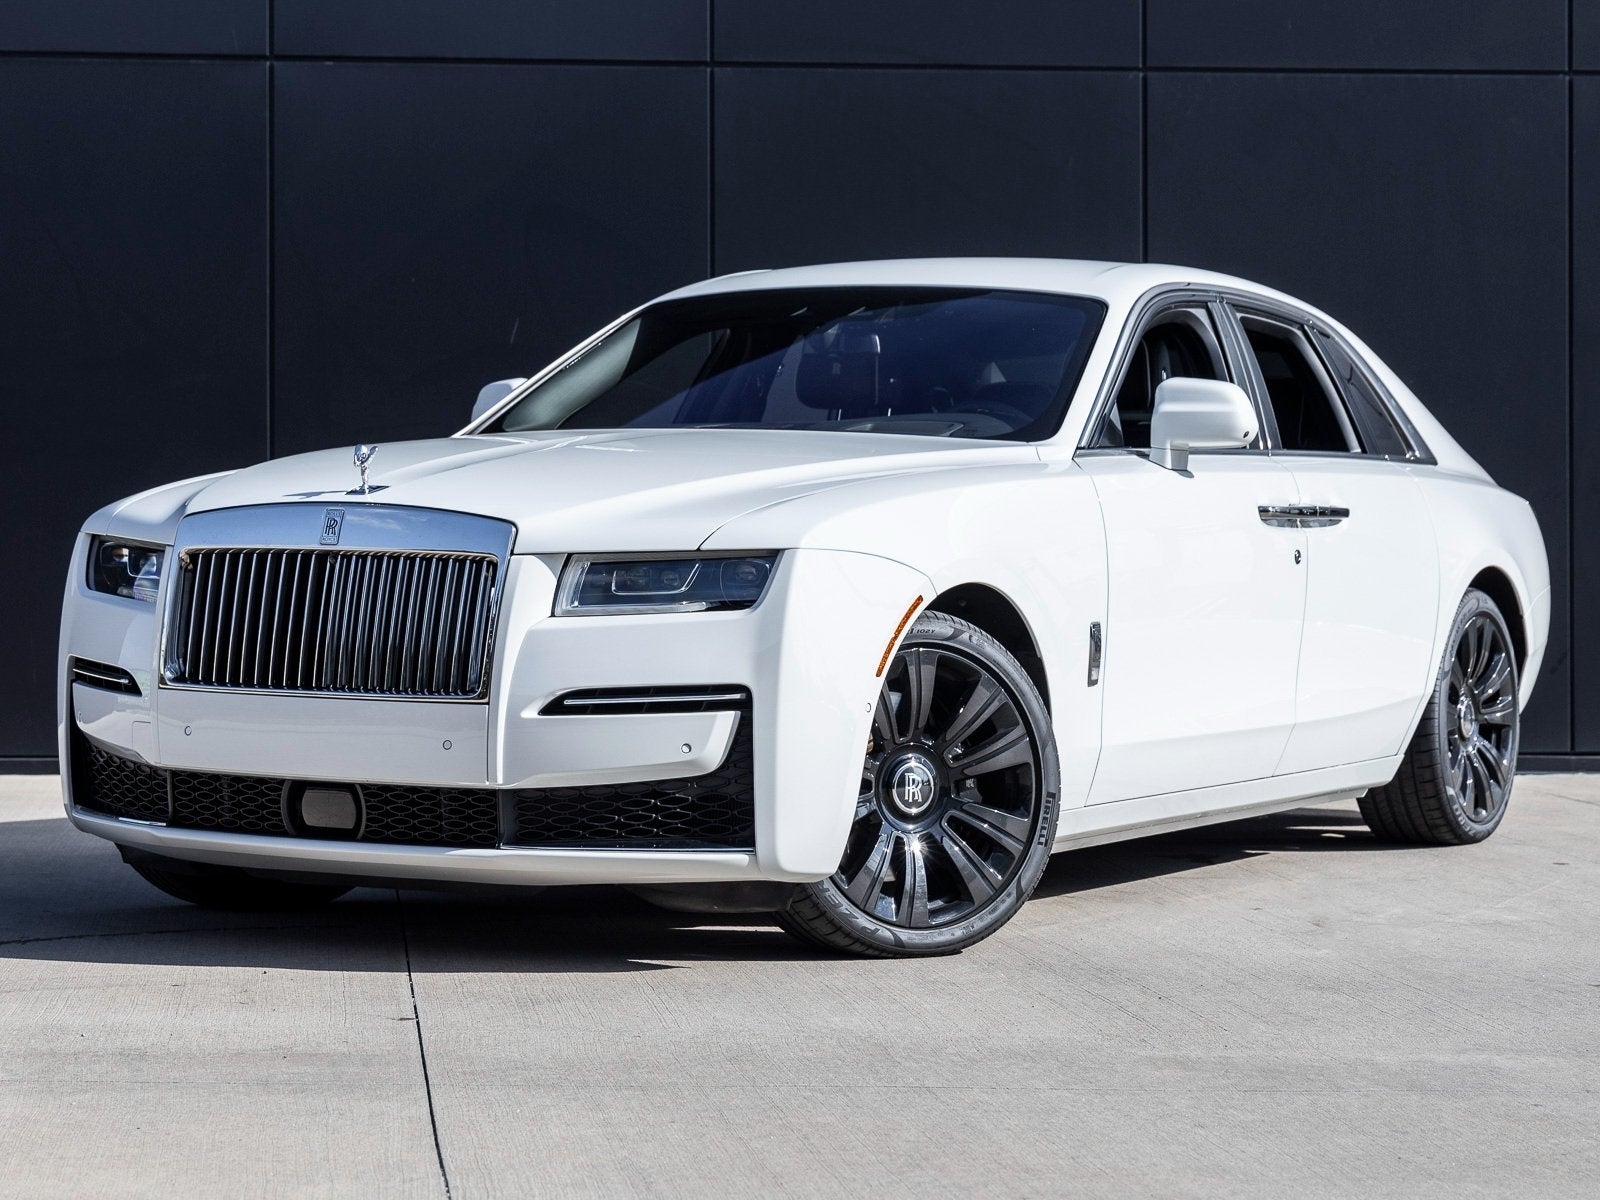 White Rolls Royce Ghost - Lifestyle Chauffeur